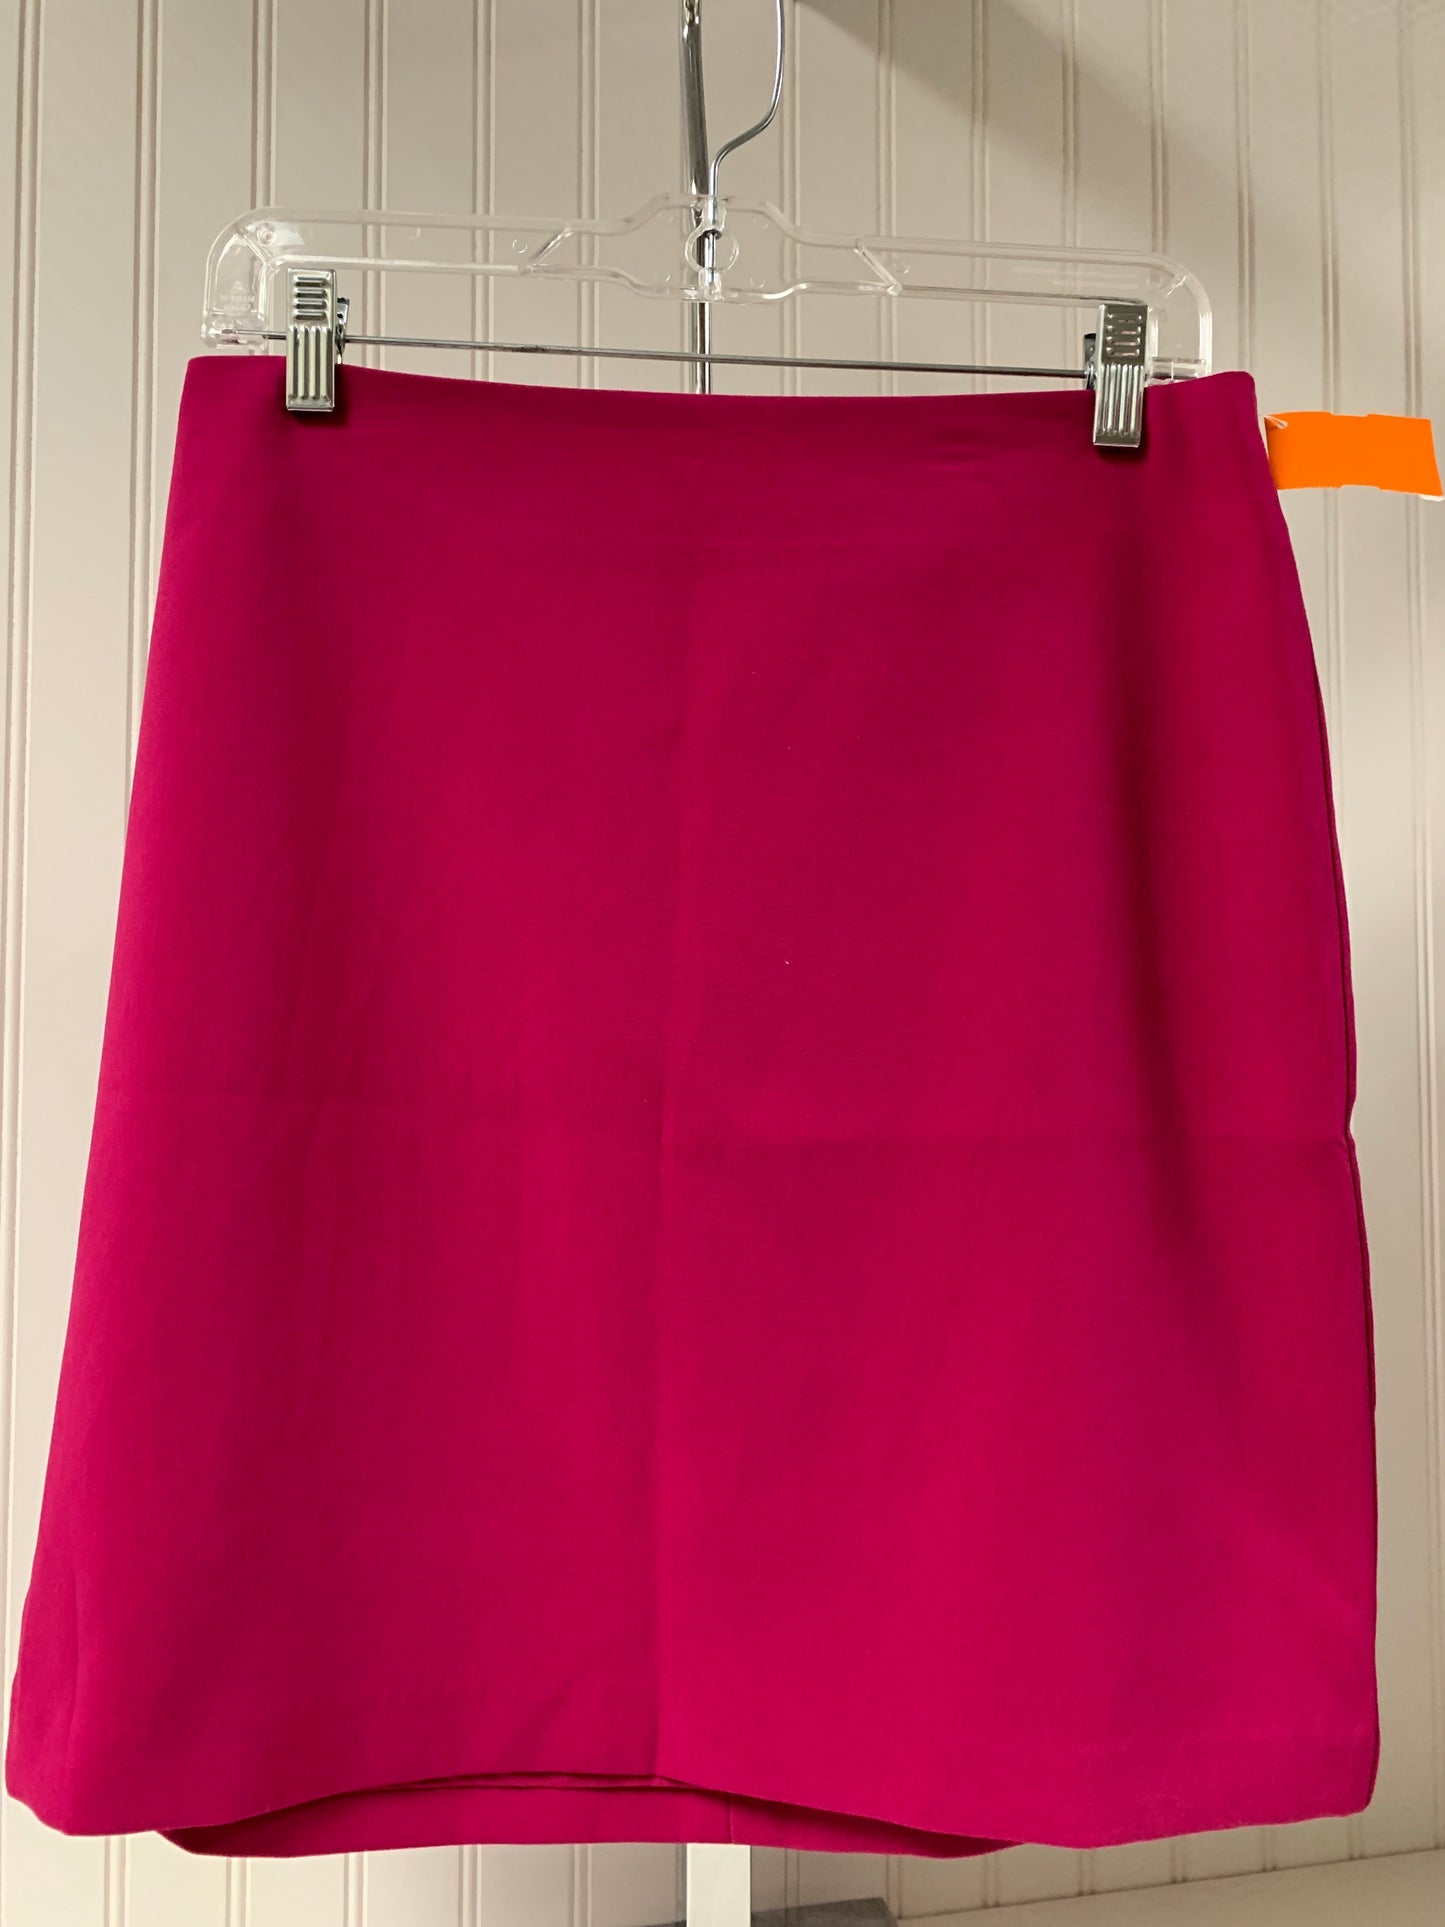 Skirt Mini & Short By Joie  Size: 6